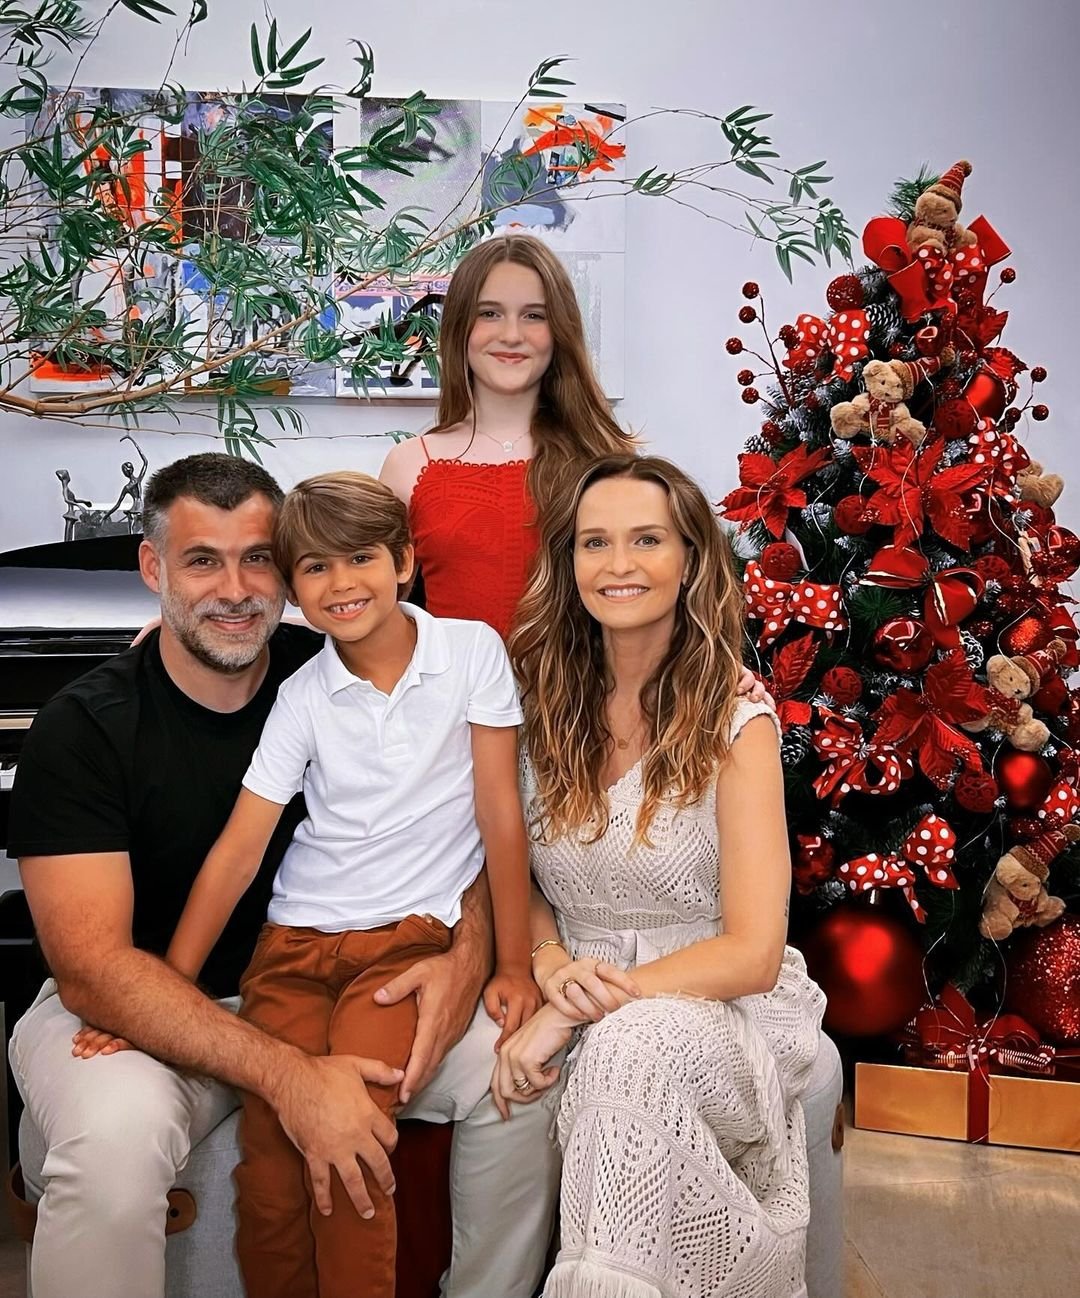 Fernanda Rodrigues e Raoni Carneiro têm dois filhos juntos